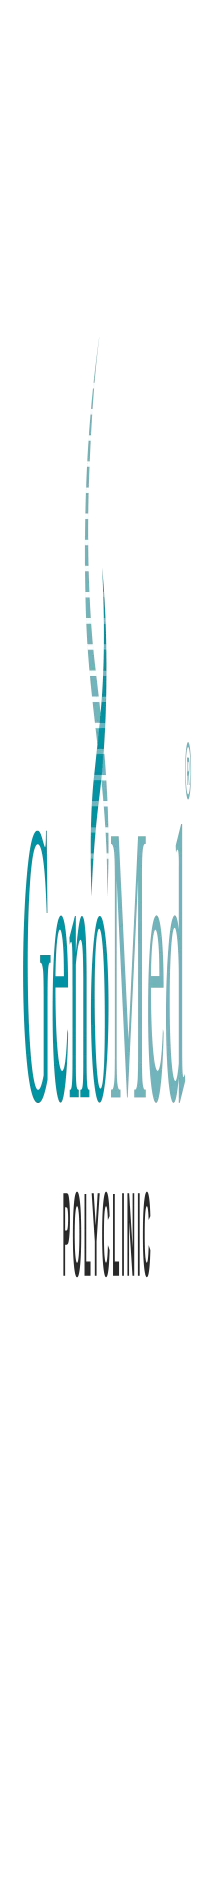 GenoMed Polyclinic Dubai logo